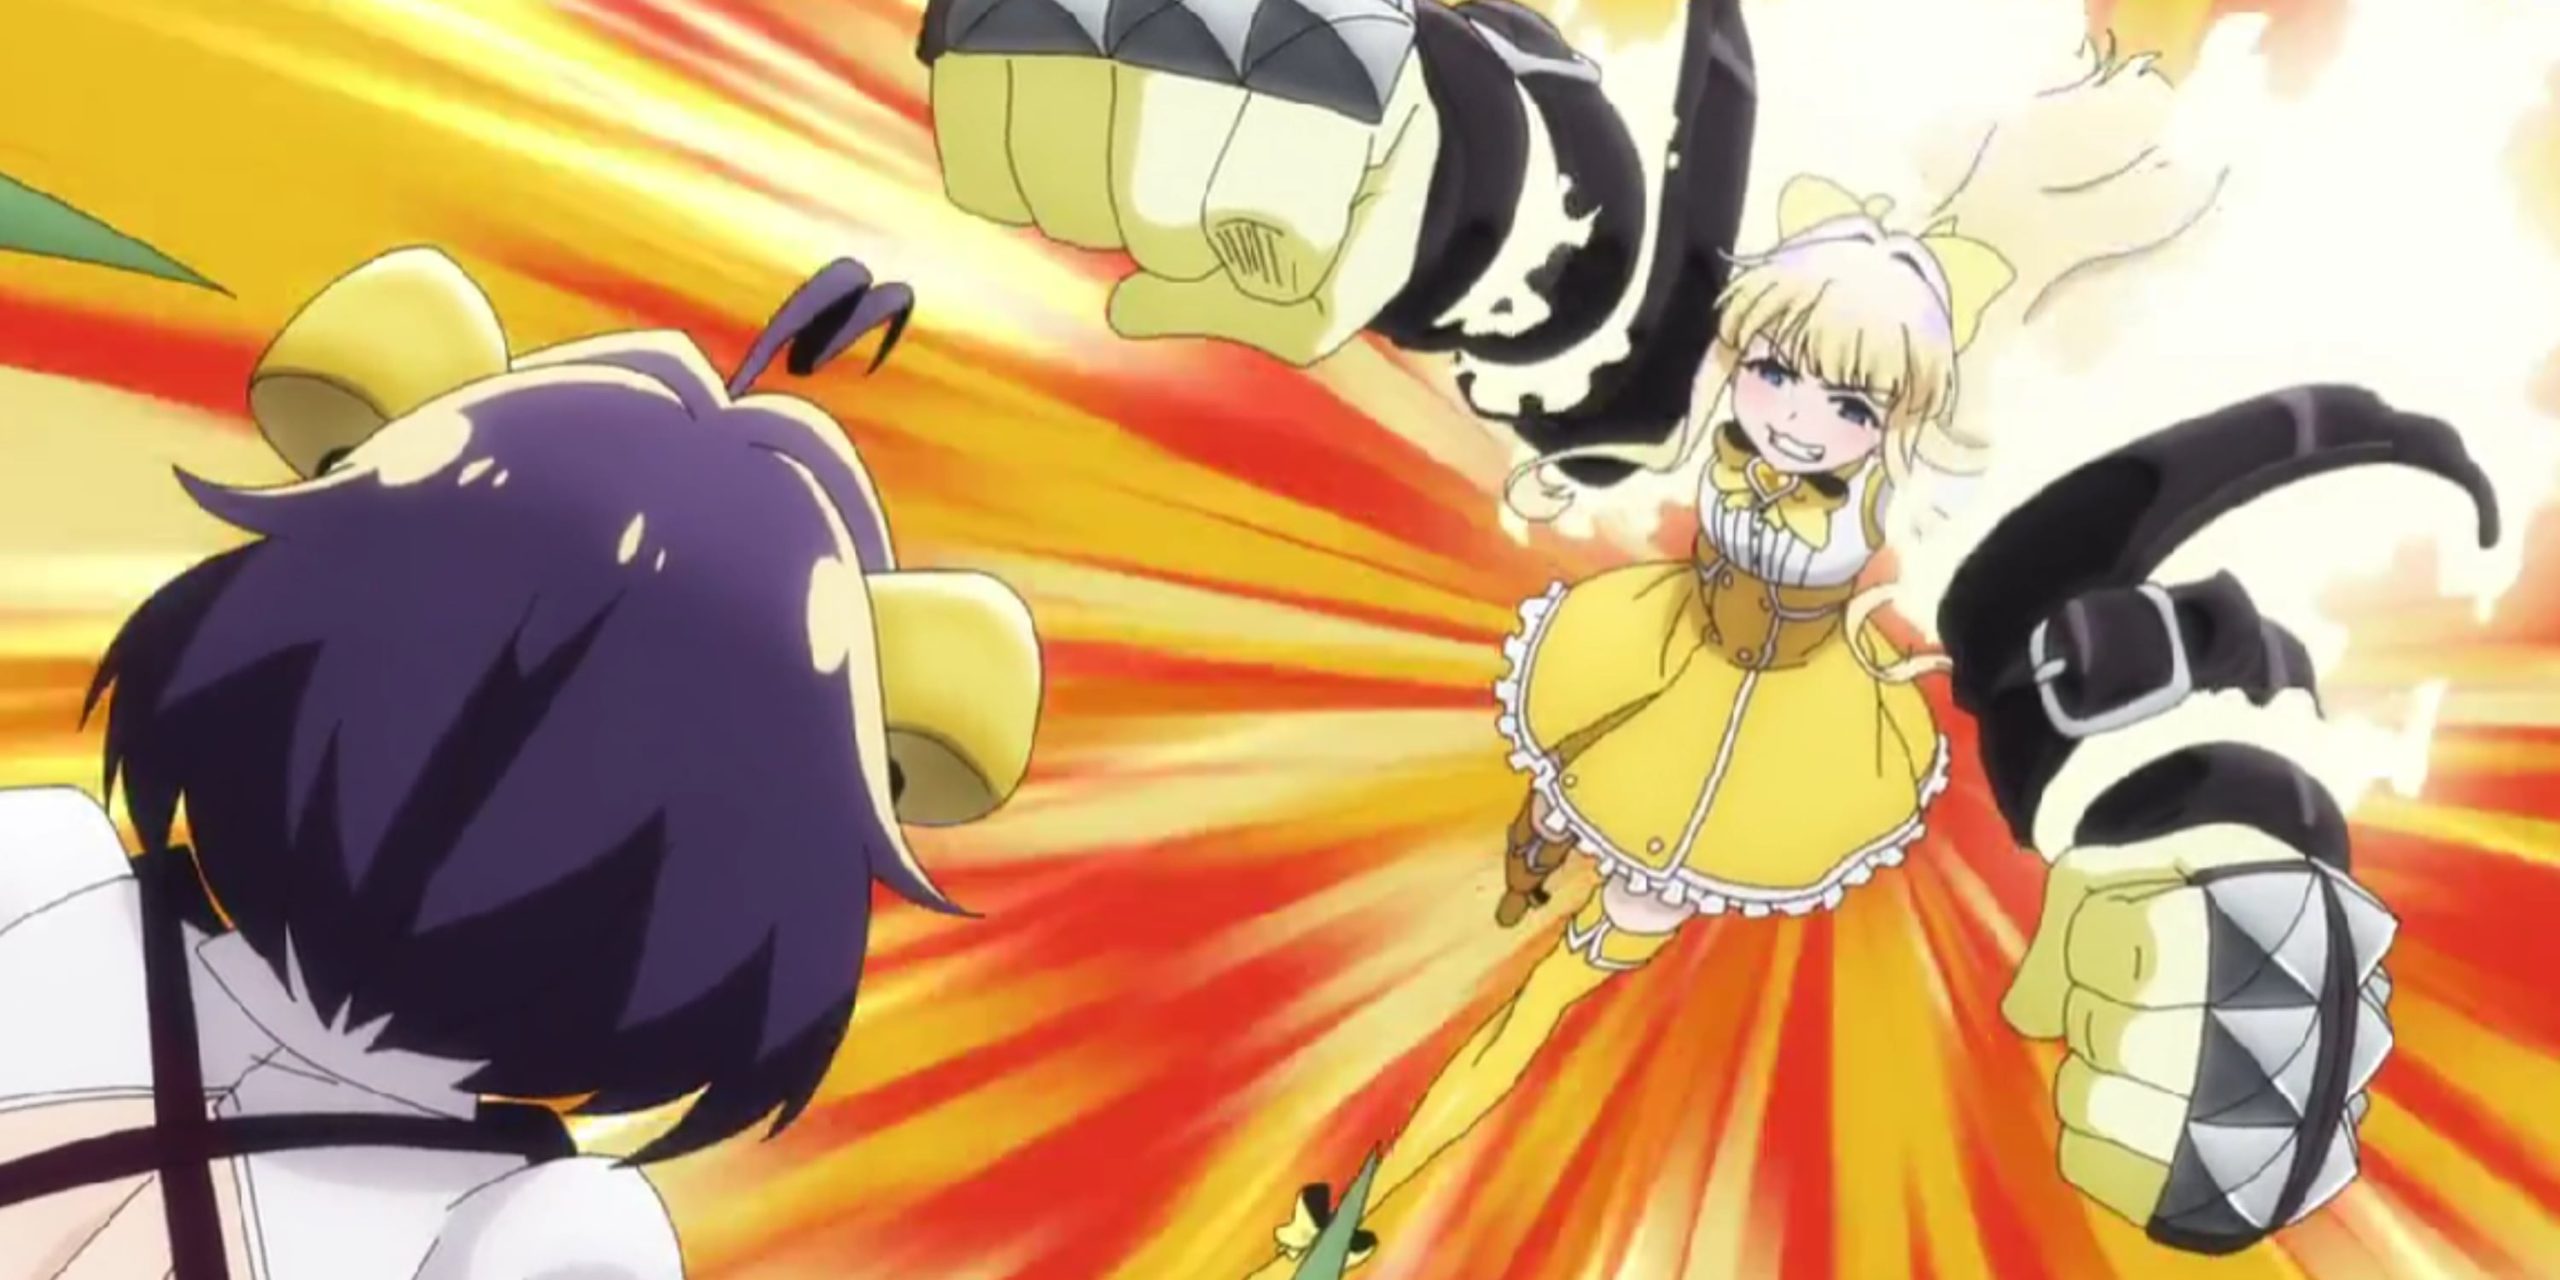 Supernatural Ecchi Anime Recap Gushing Over Magical Girls Episode 5 